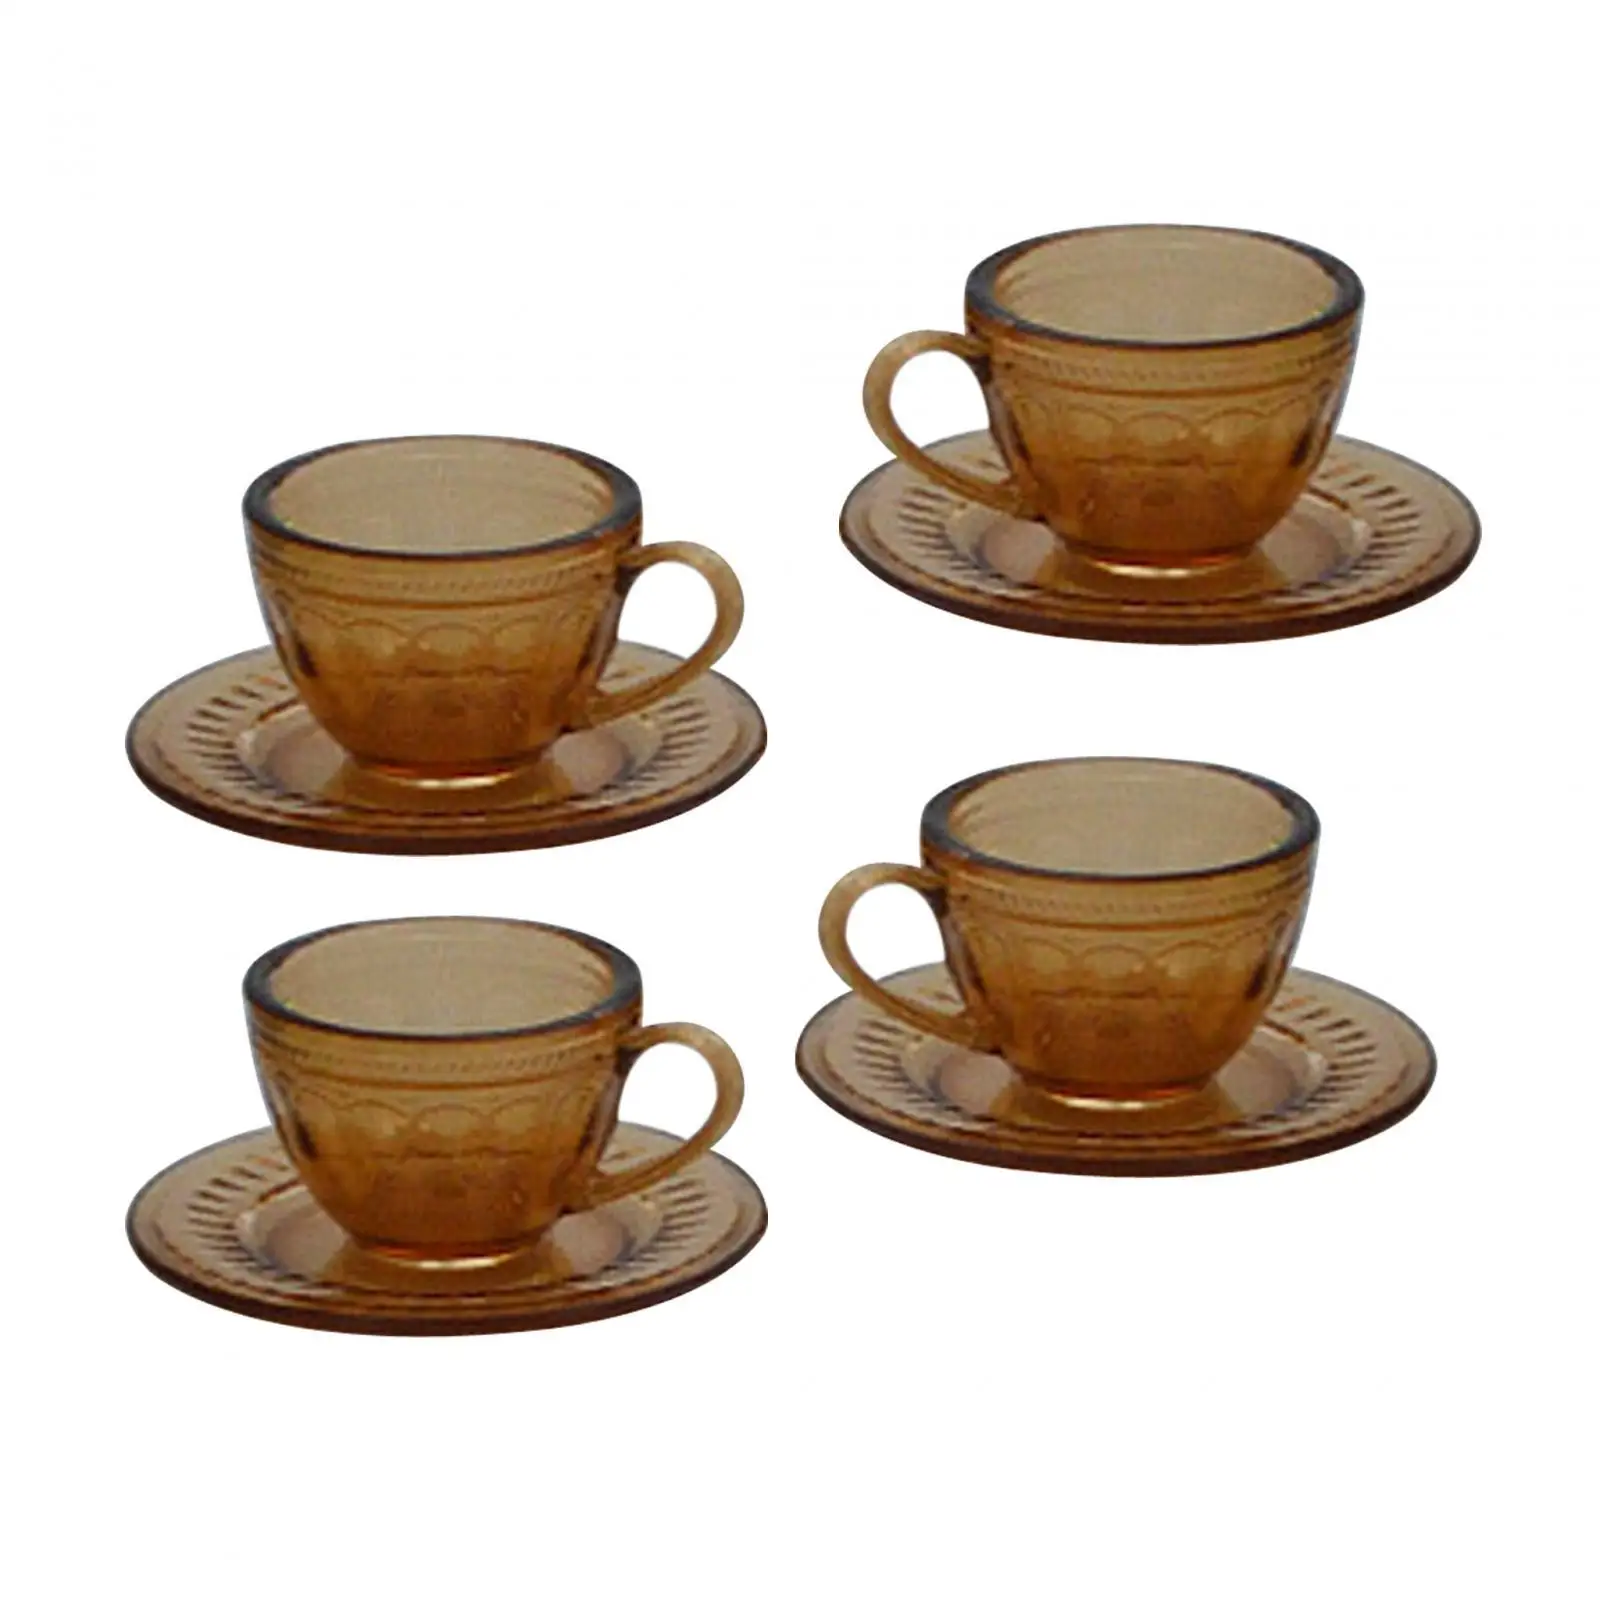 4 Pieces Dollhouse Tea Cup Set 1/6 Miniature Tableware for Diorama Dollhouse